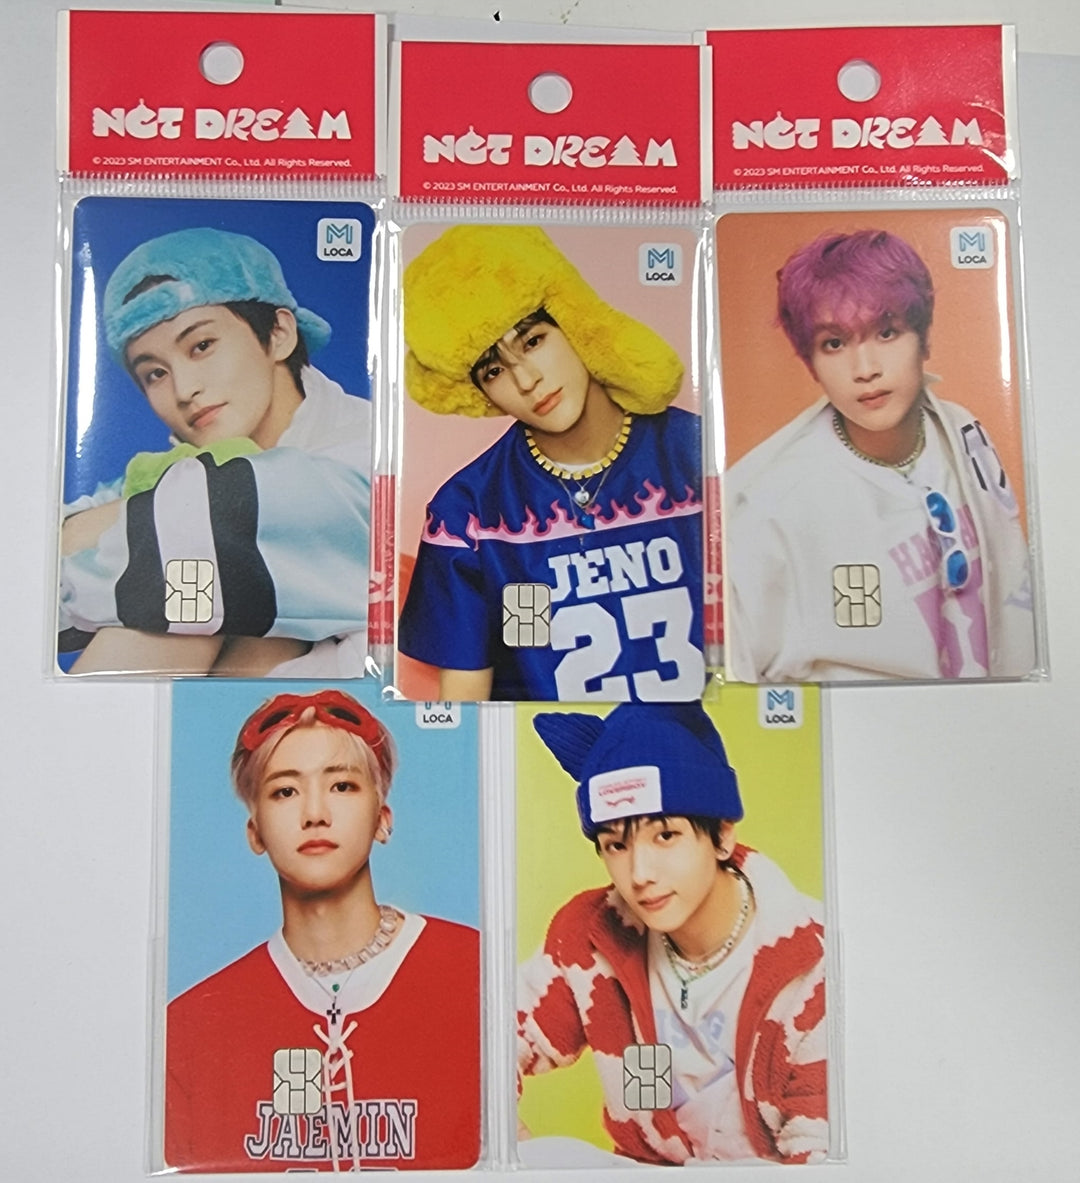 NCT DREAM "Candy" Winter Special Mini Album - Smtown & Store LOCAMOBILITY CARD